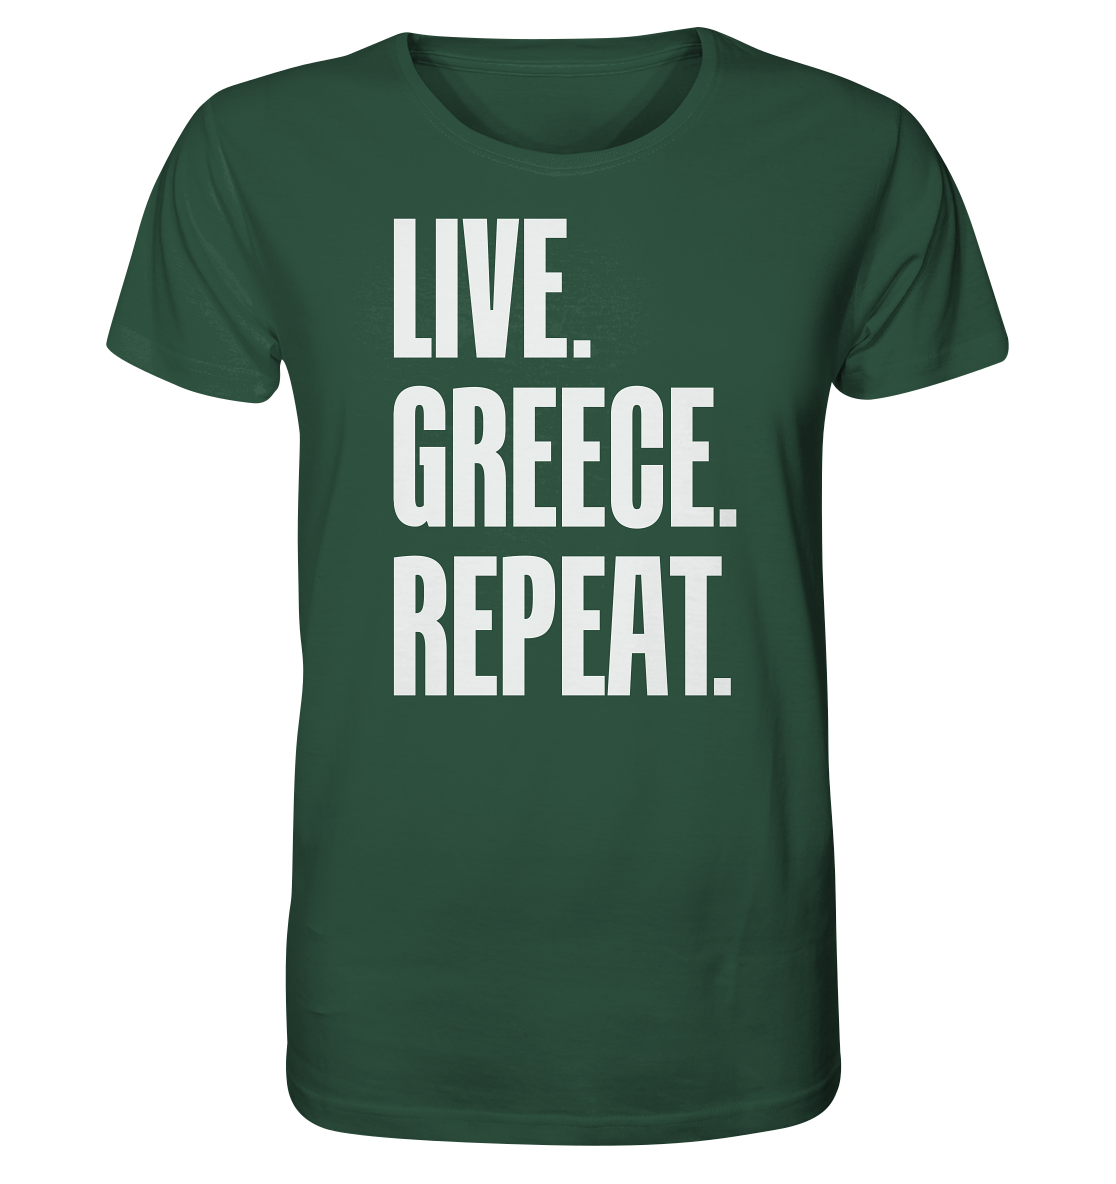 LIVE. GREECE. REPEAT. - Organic Shirt